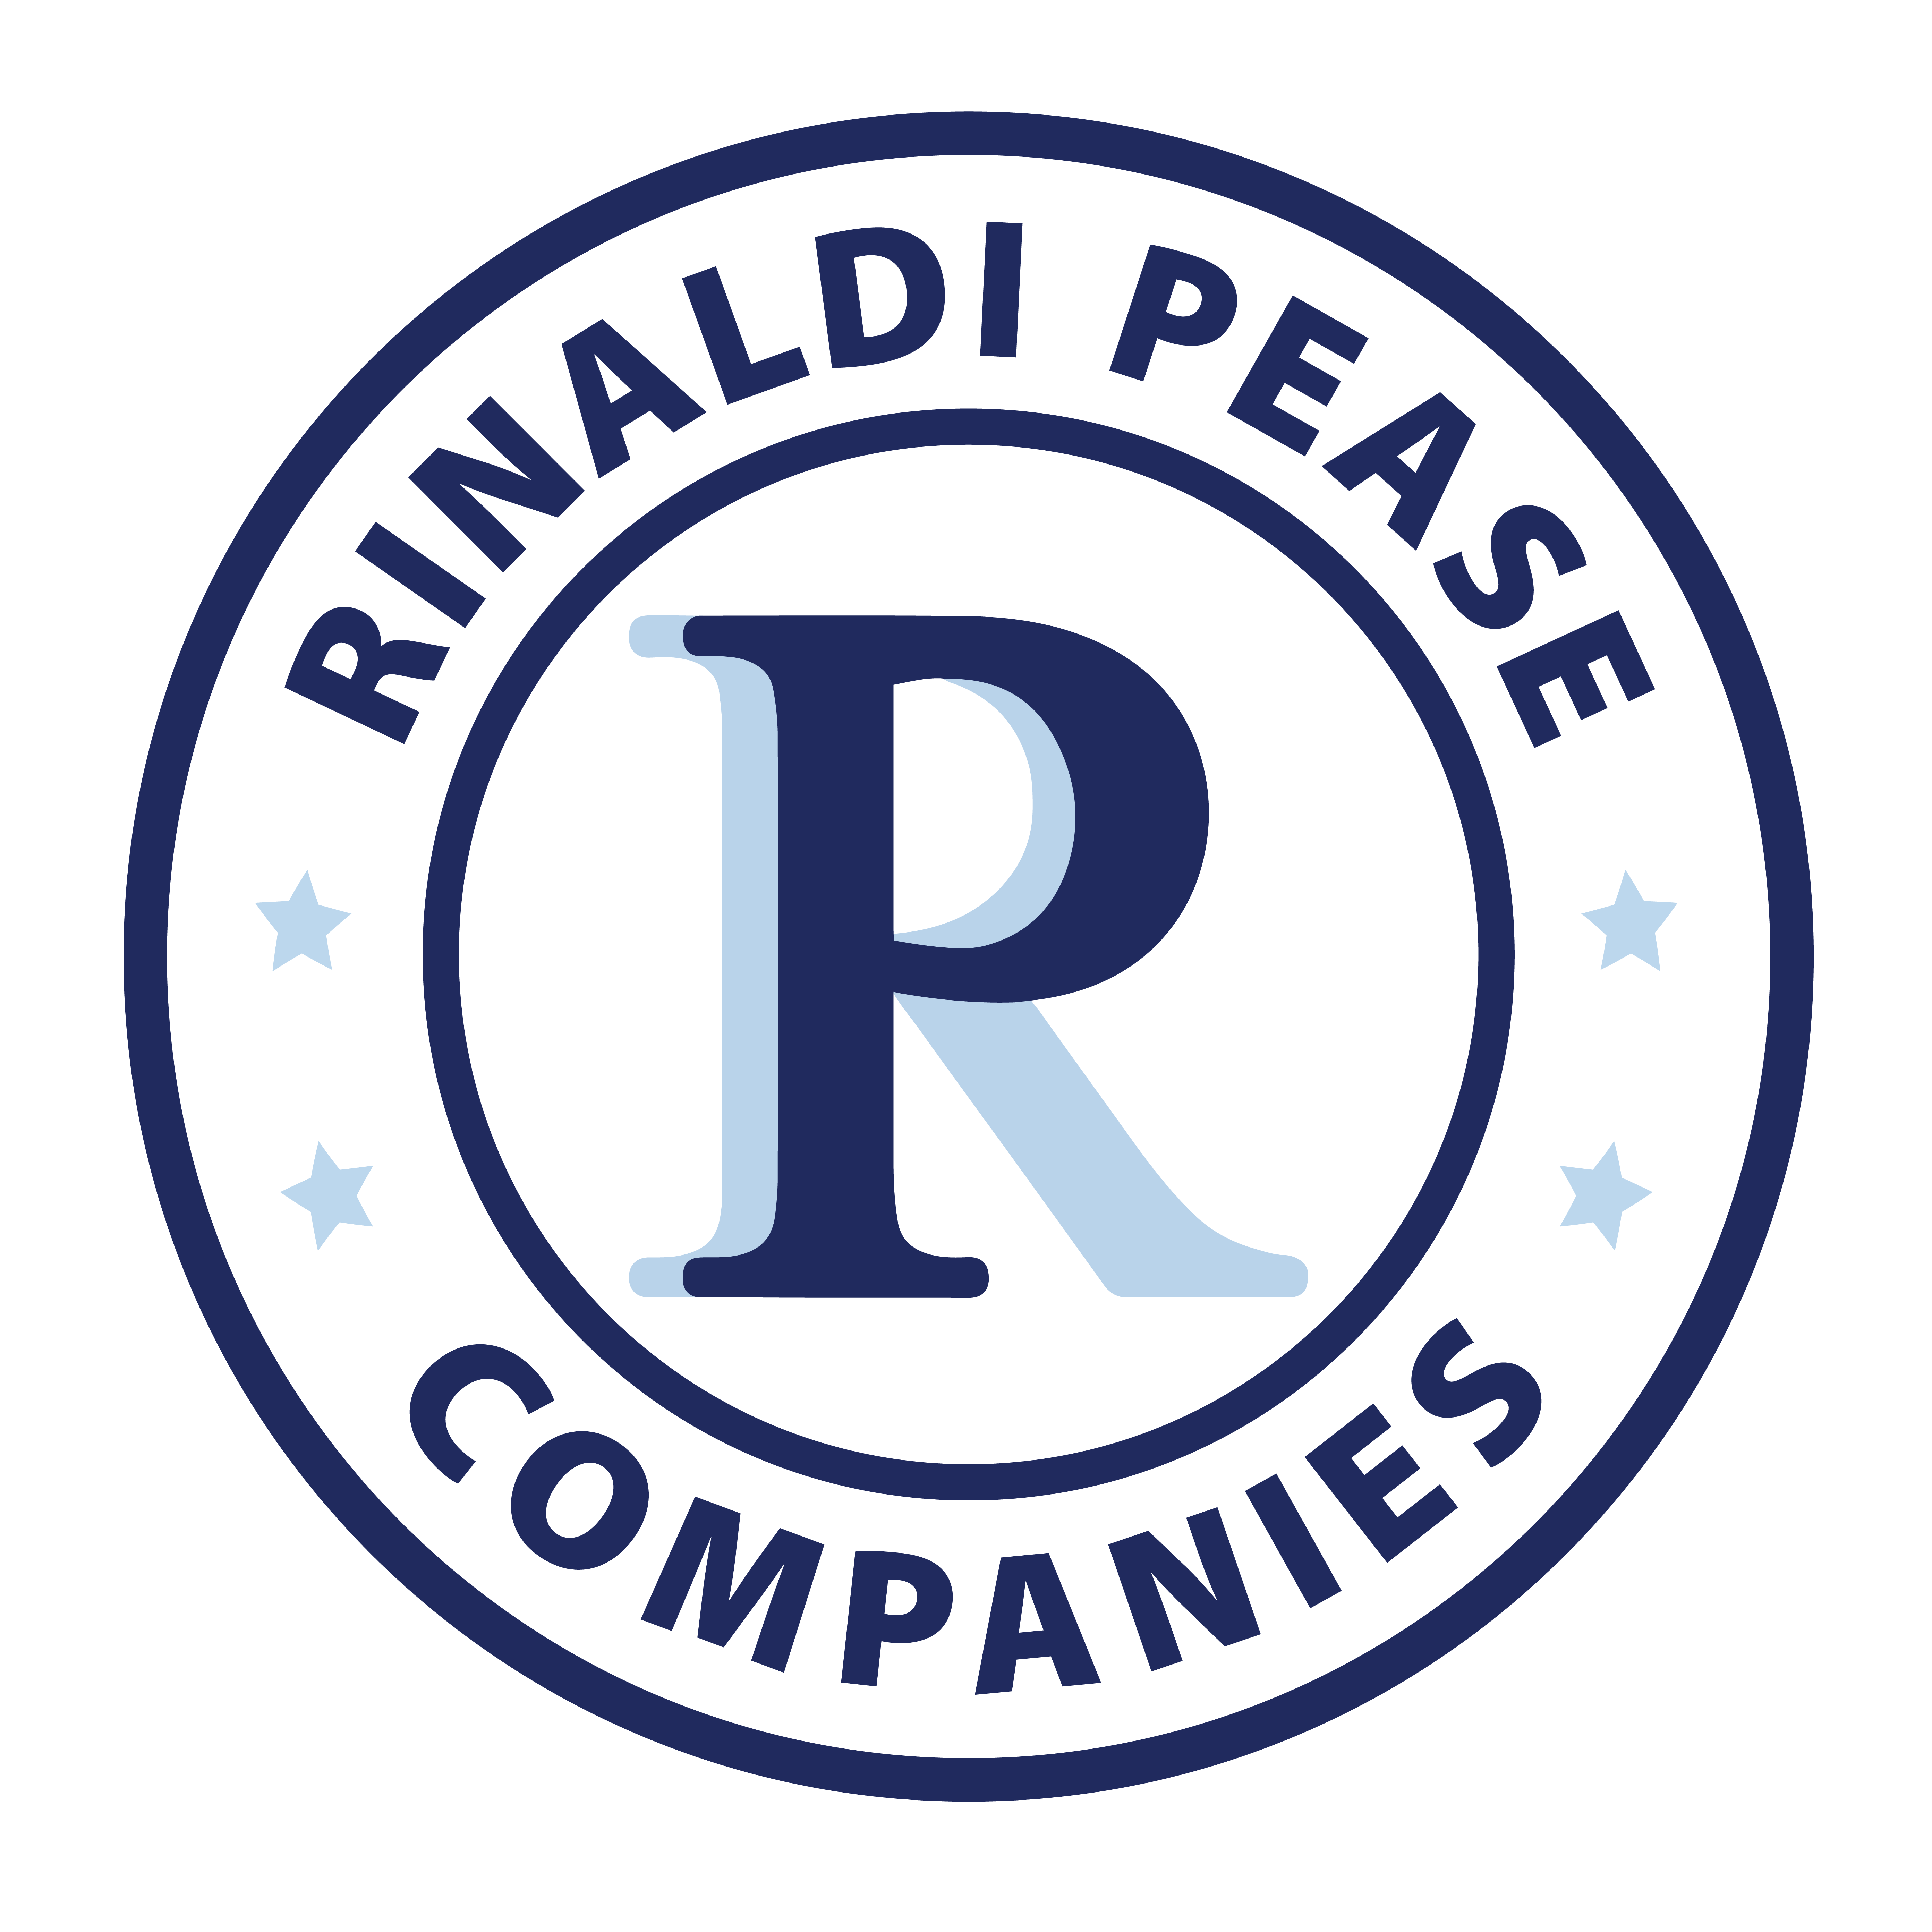 Rinaldi Pease Companies LLC